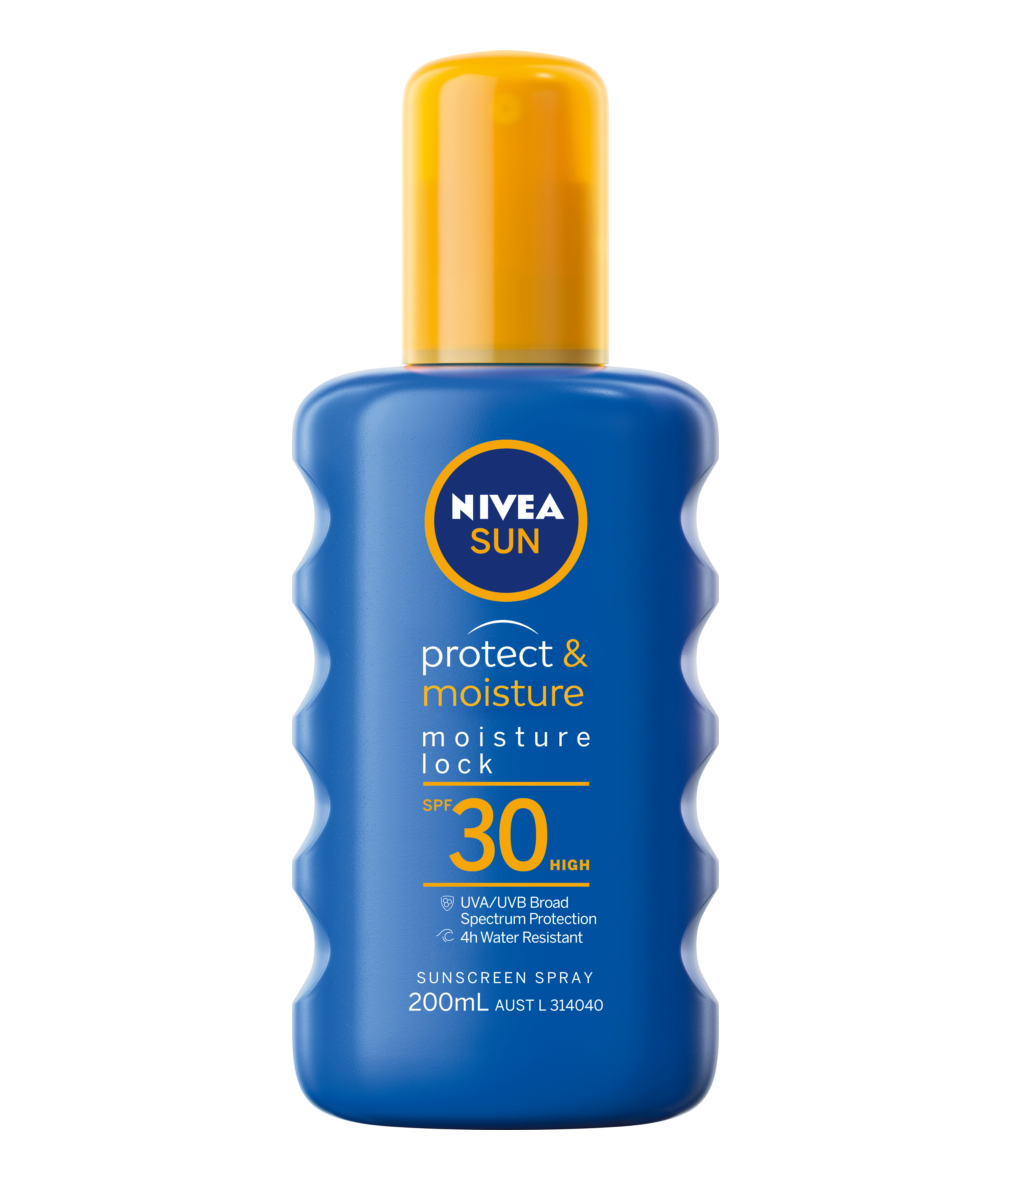 Sunscreen Products - NIVEA